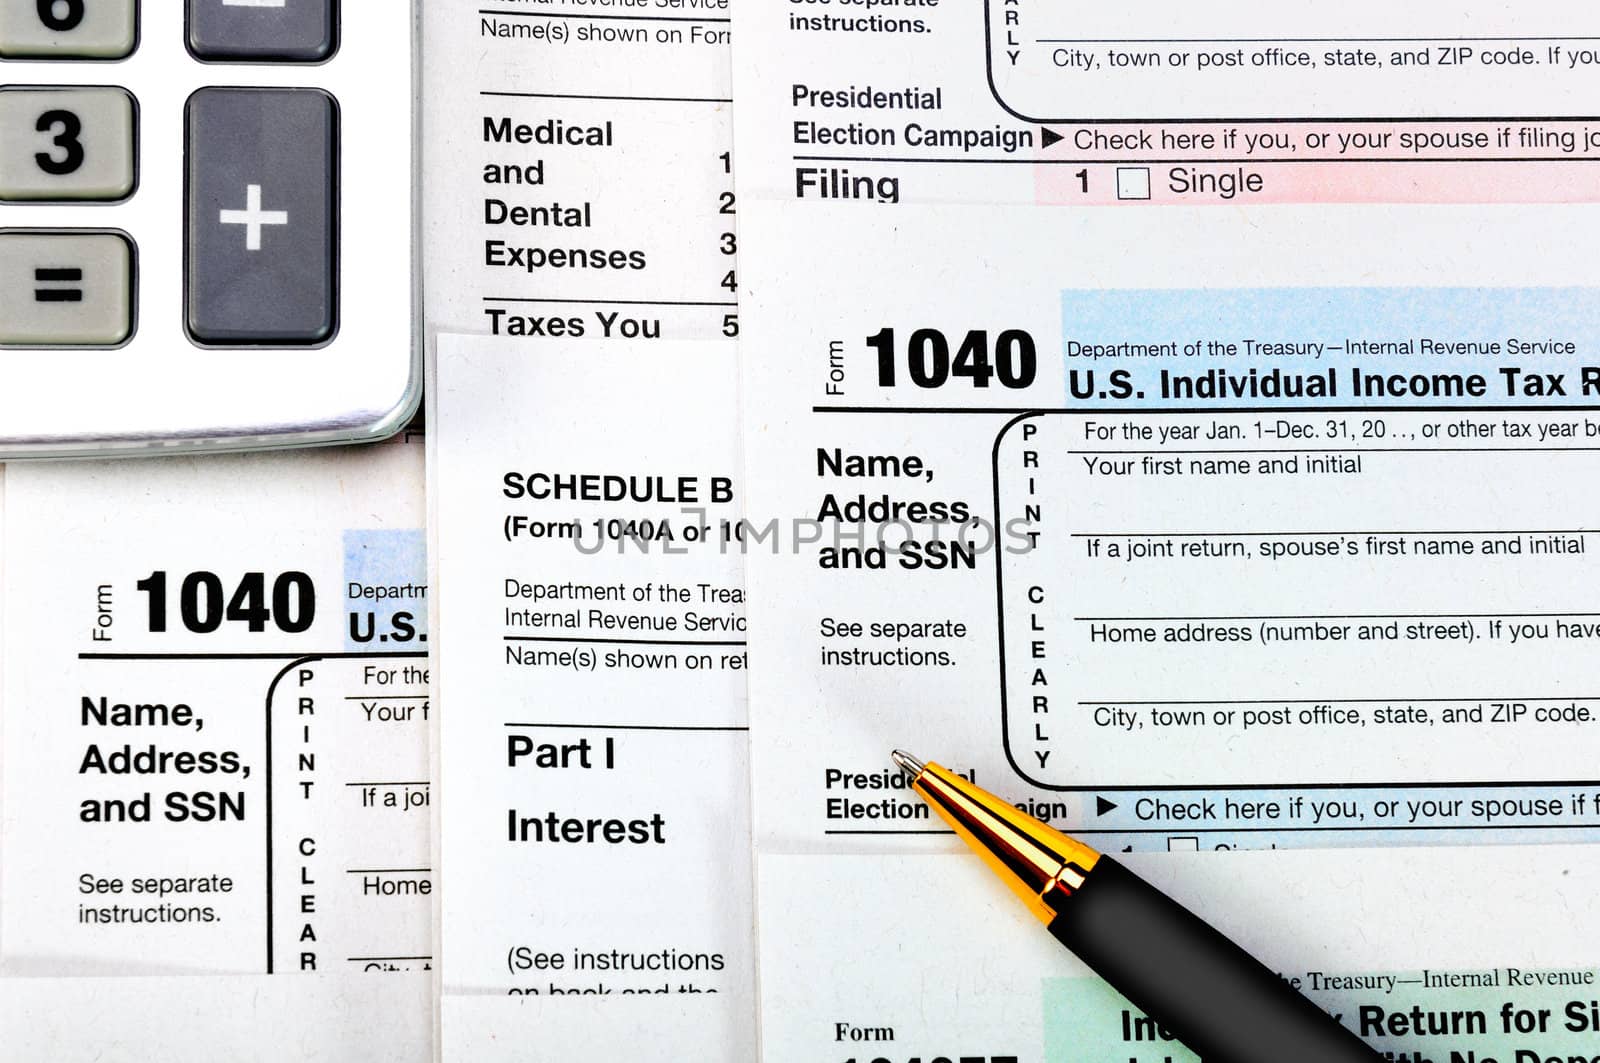 U.S. Individual Income Tax Return forms. by lobzik